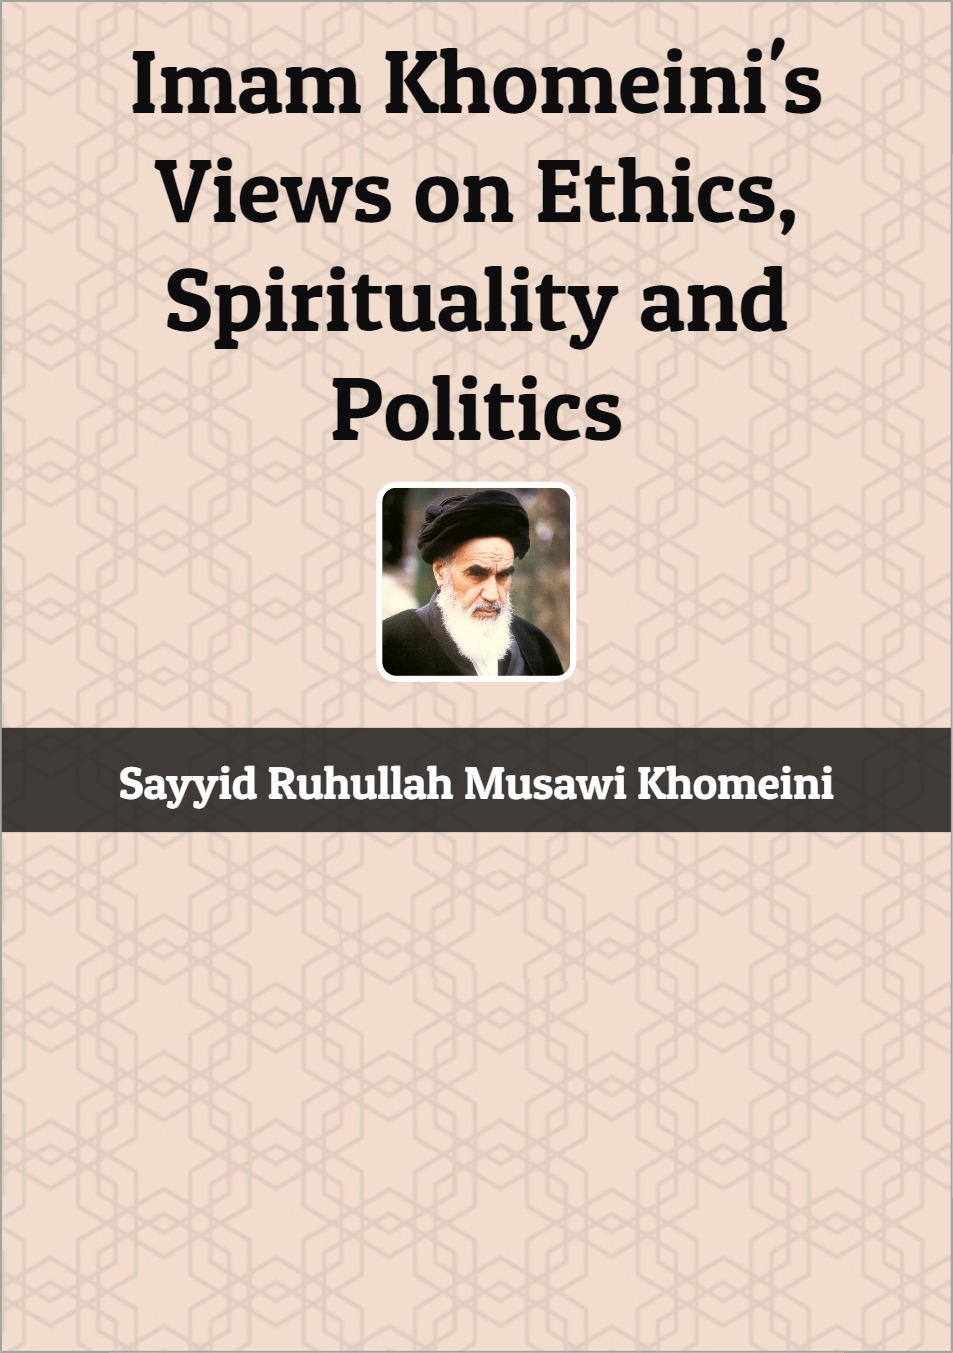 Imam Khomeini's Views on Ethics, Spirituality and Politics